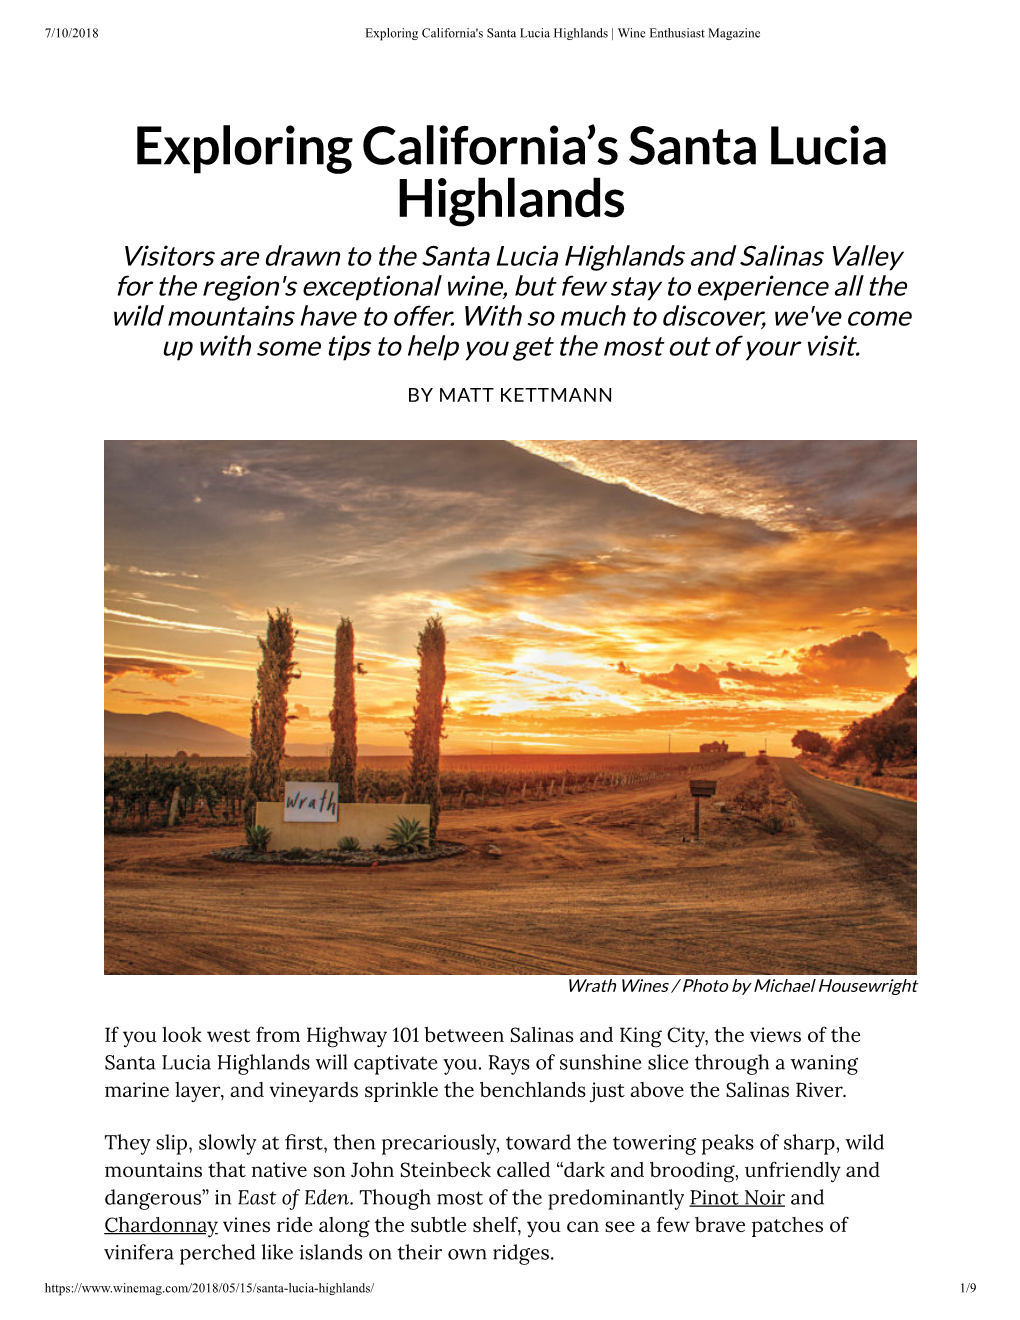 Exploring California's Santa Lucia Highlands | Wine Enthusiast Magazine